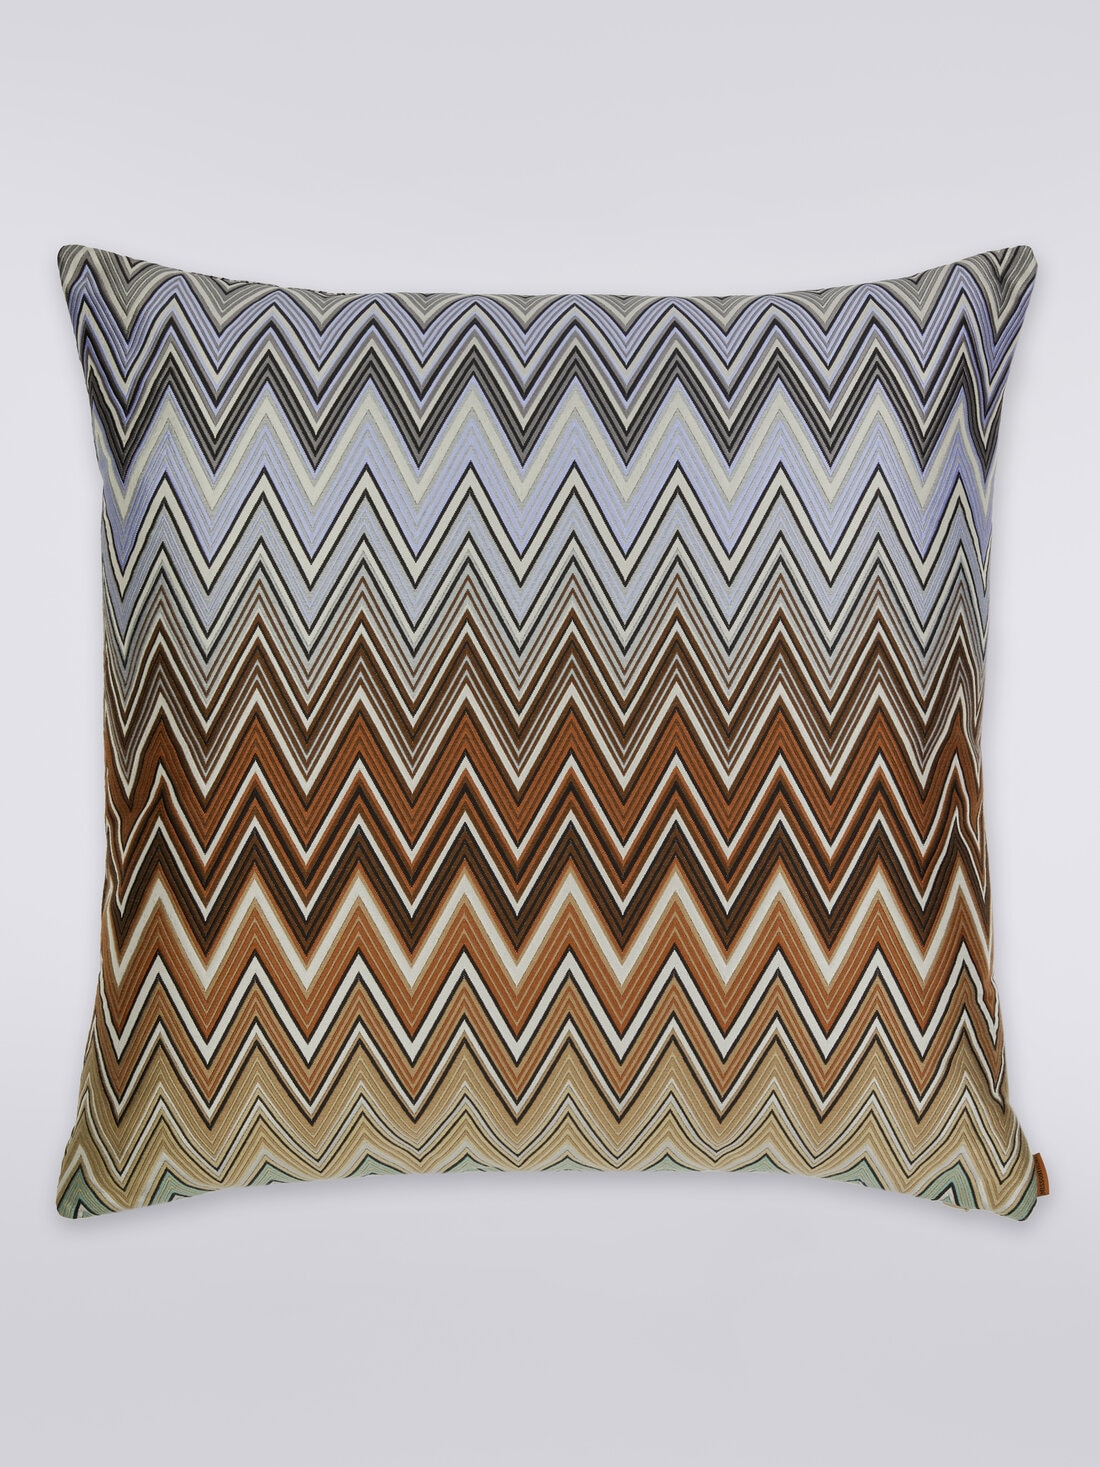 Birmingham cushion 60x60 cm, Multicoloured  - 8051275581161 - 0